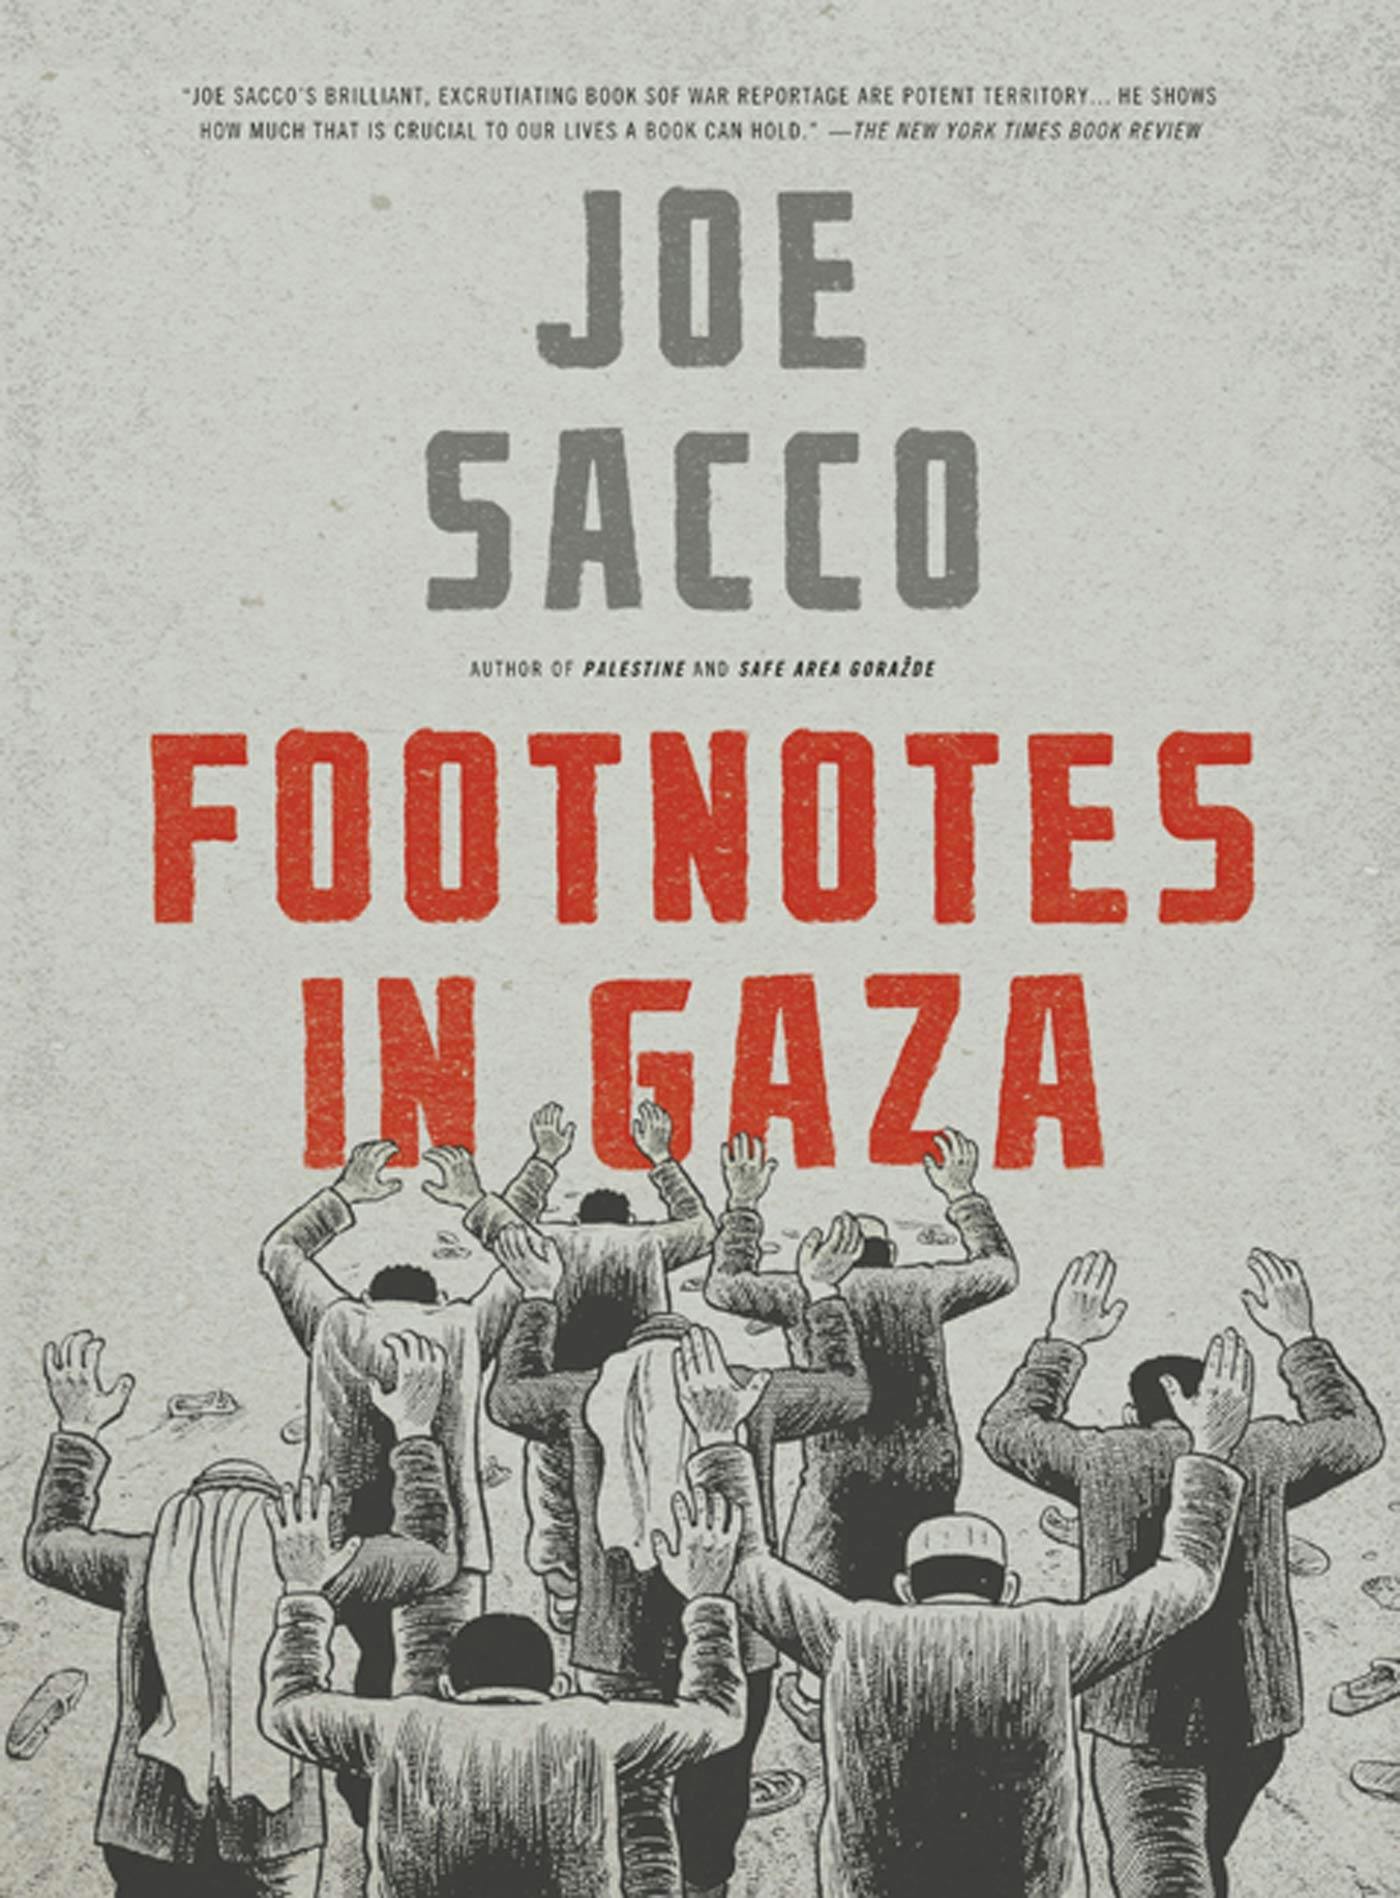 Footnotes of gaza